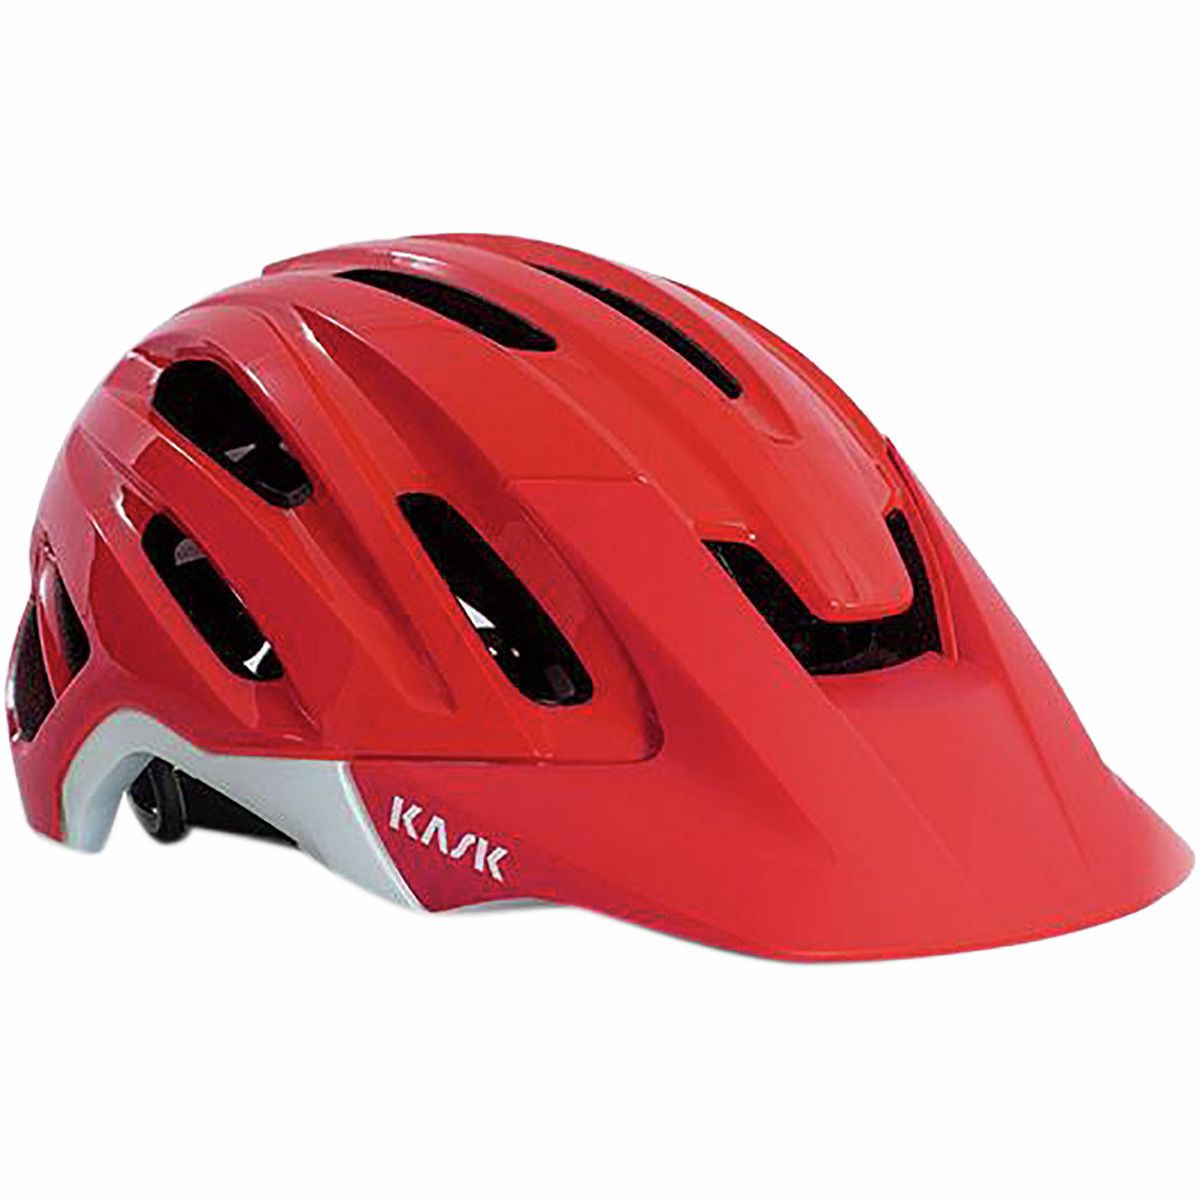 Kask Caipi Bike Helmet - Men's Red, M